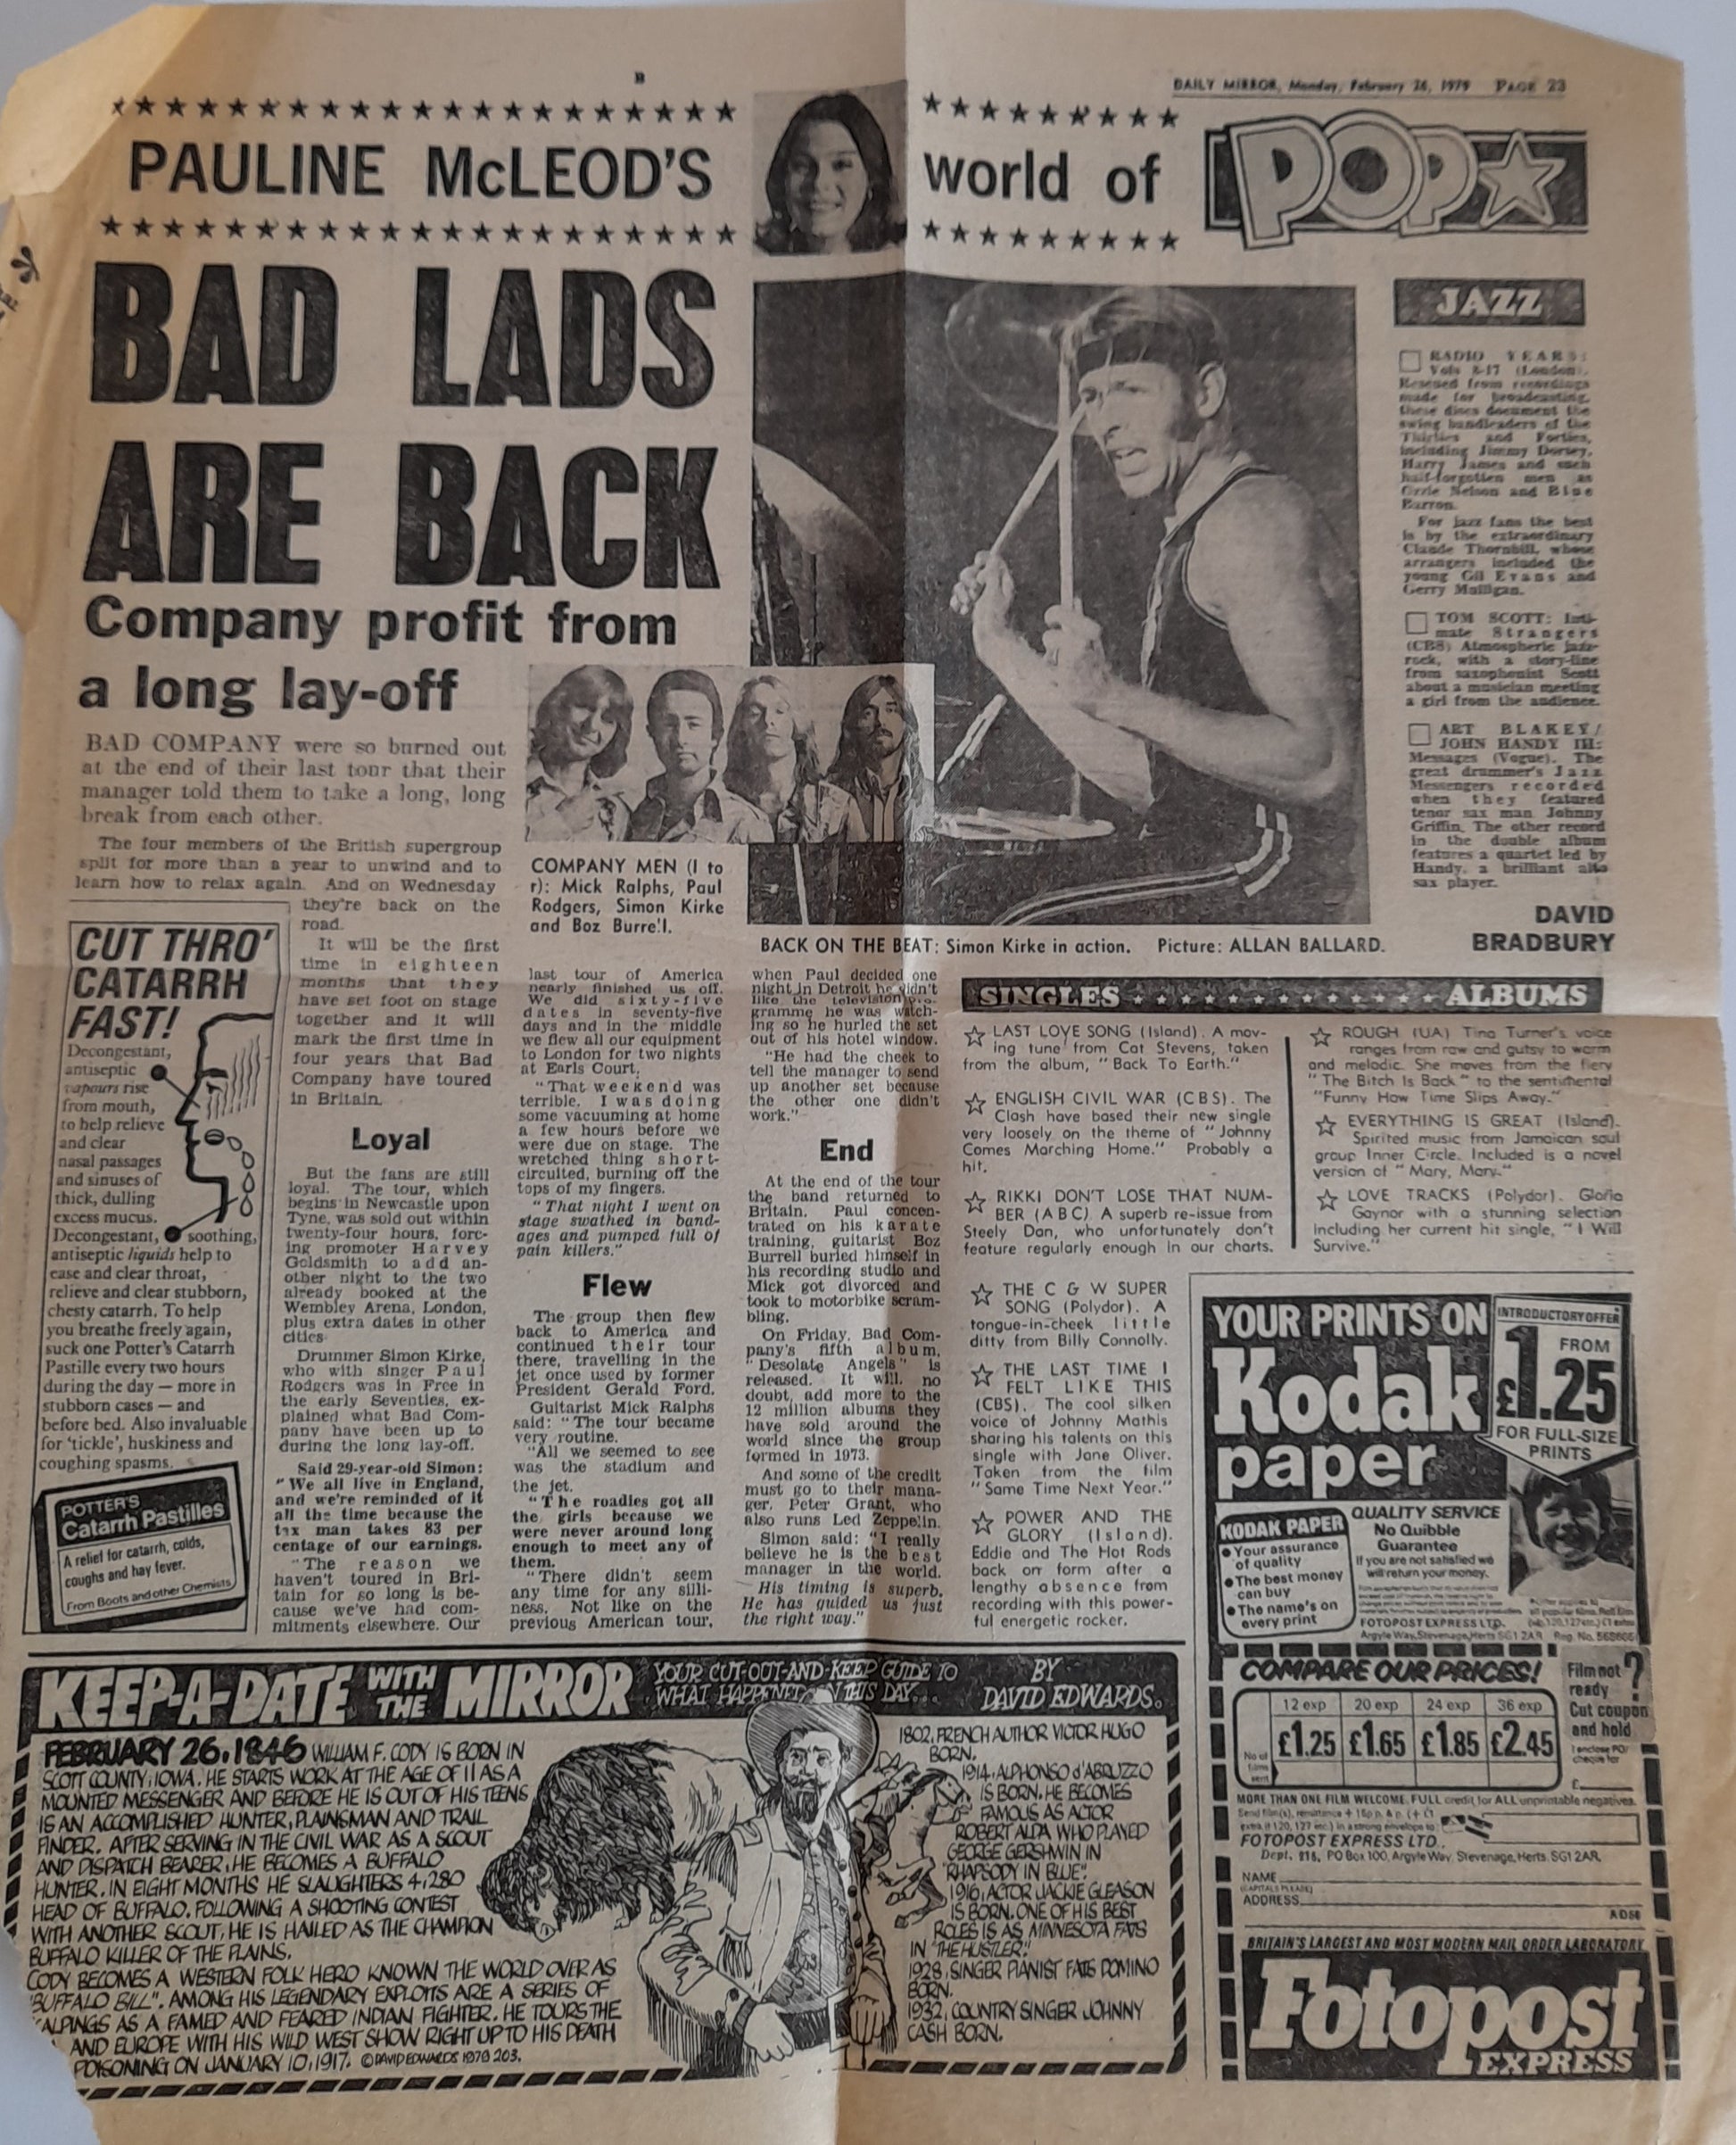 Bad Company British Tour Concert Programme 1979 plus newspaper cutting